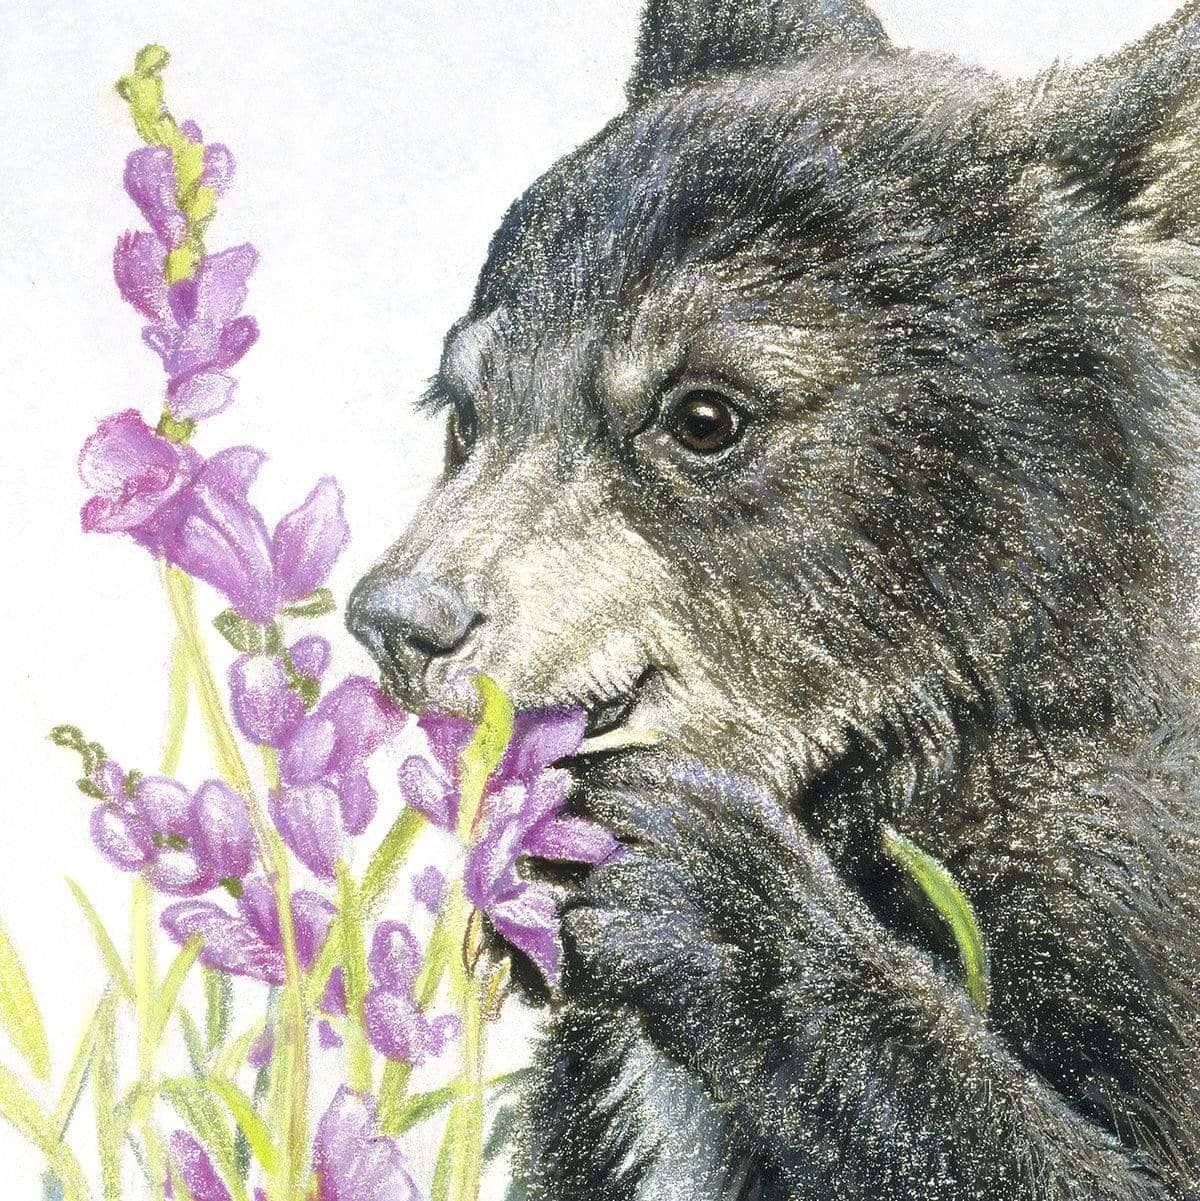 Black Bear Cubs in Grass - Canvas Print | Artwork by Glen Loates